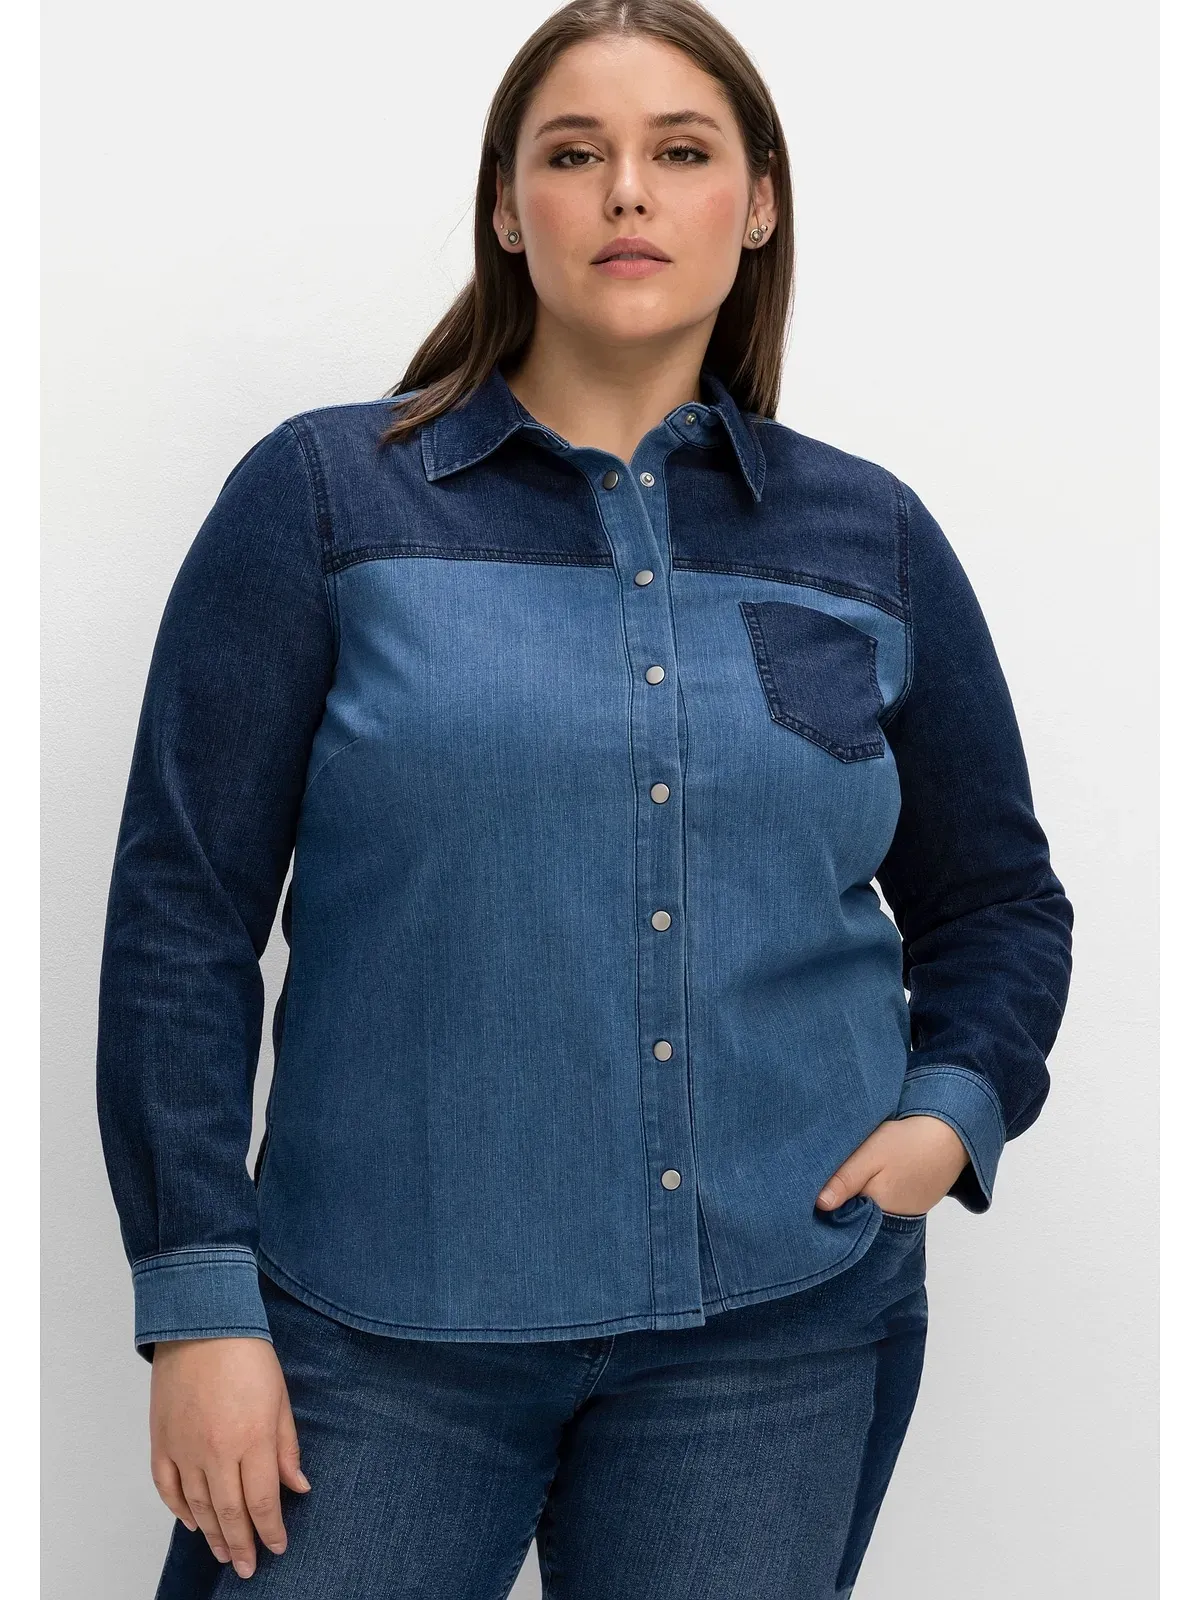 Jeansbluse SHEEGO "Große Größen" Gr. 48, blau (blue denim) Damen Blusen langarm